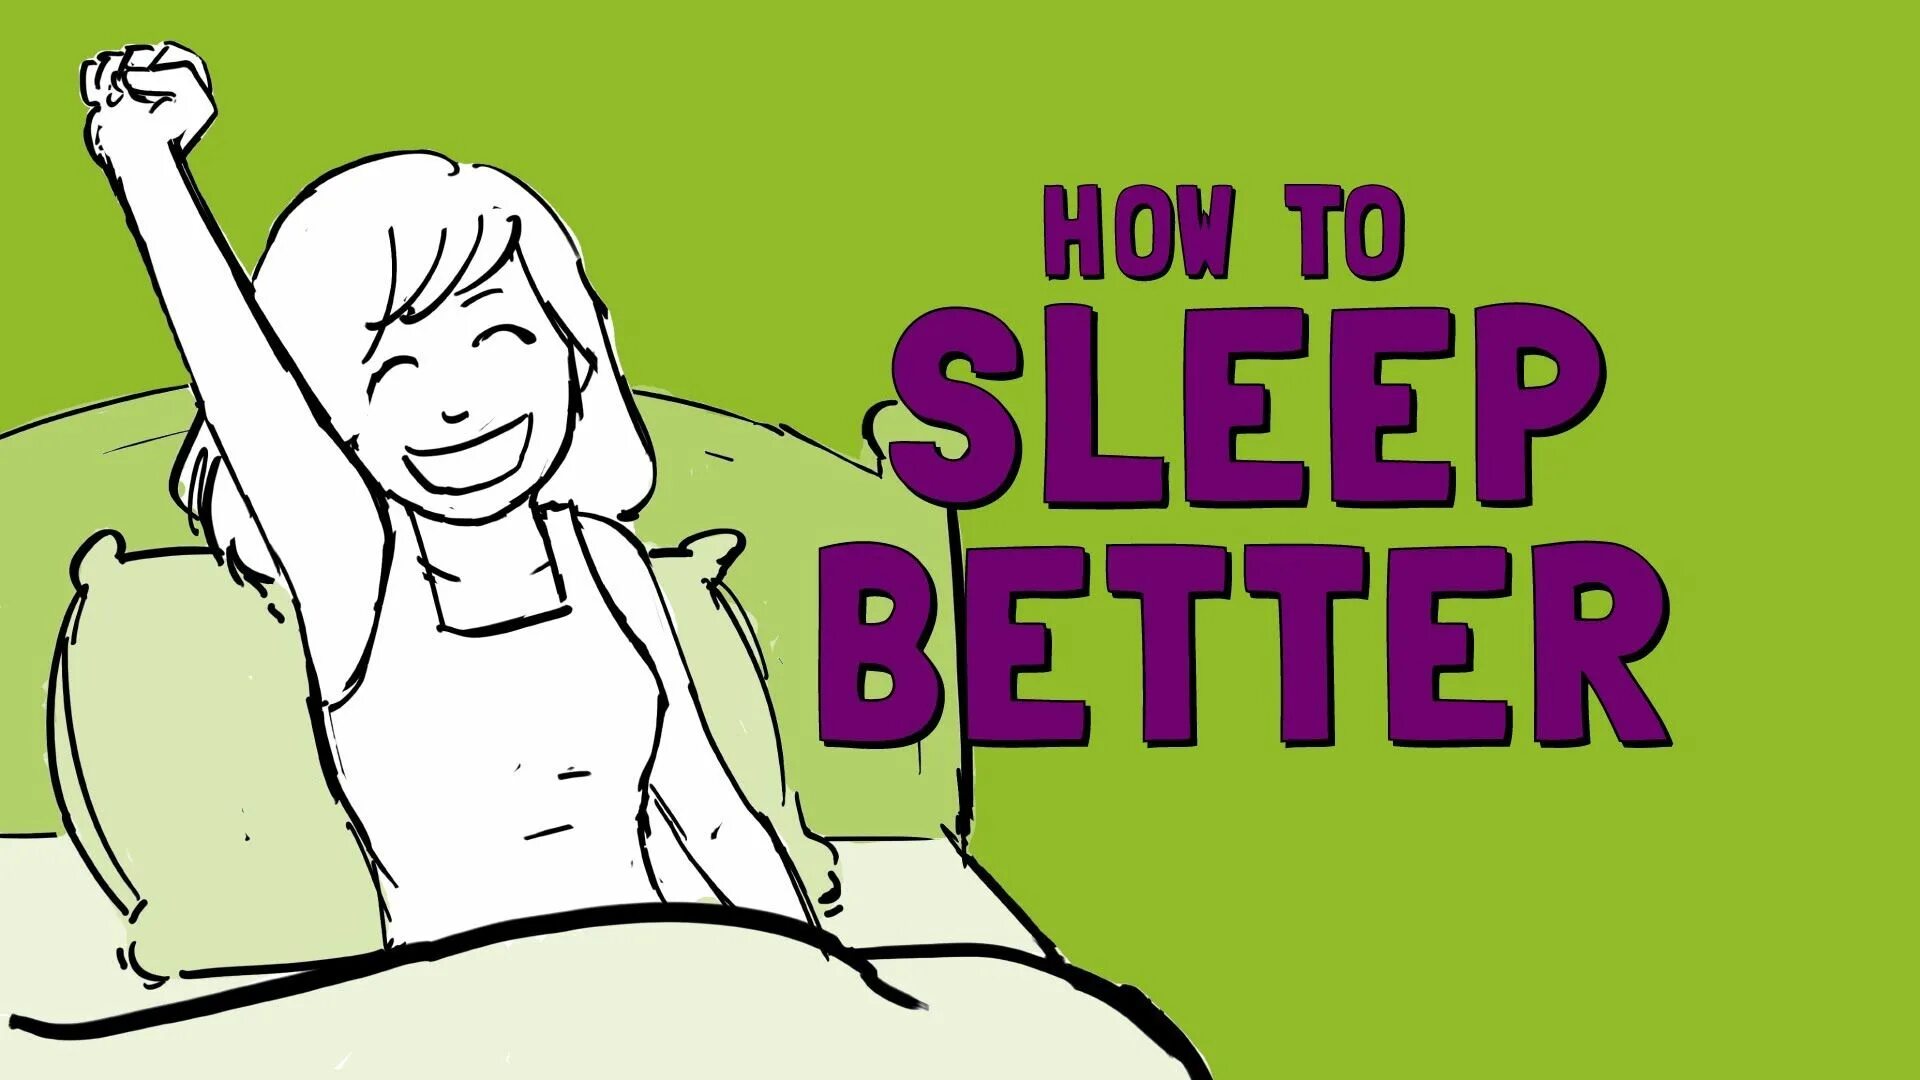 Best better sleep. How to Sleep. How to Sleep well. How to Sleep better. Good Sleep картинки.